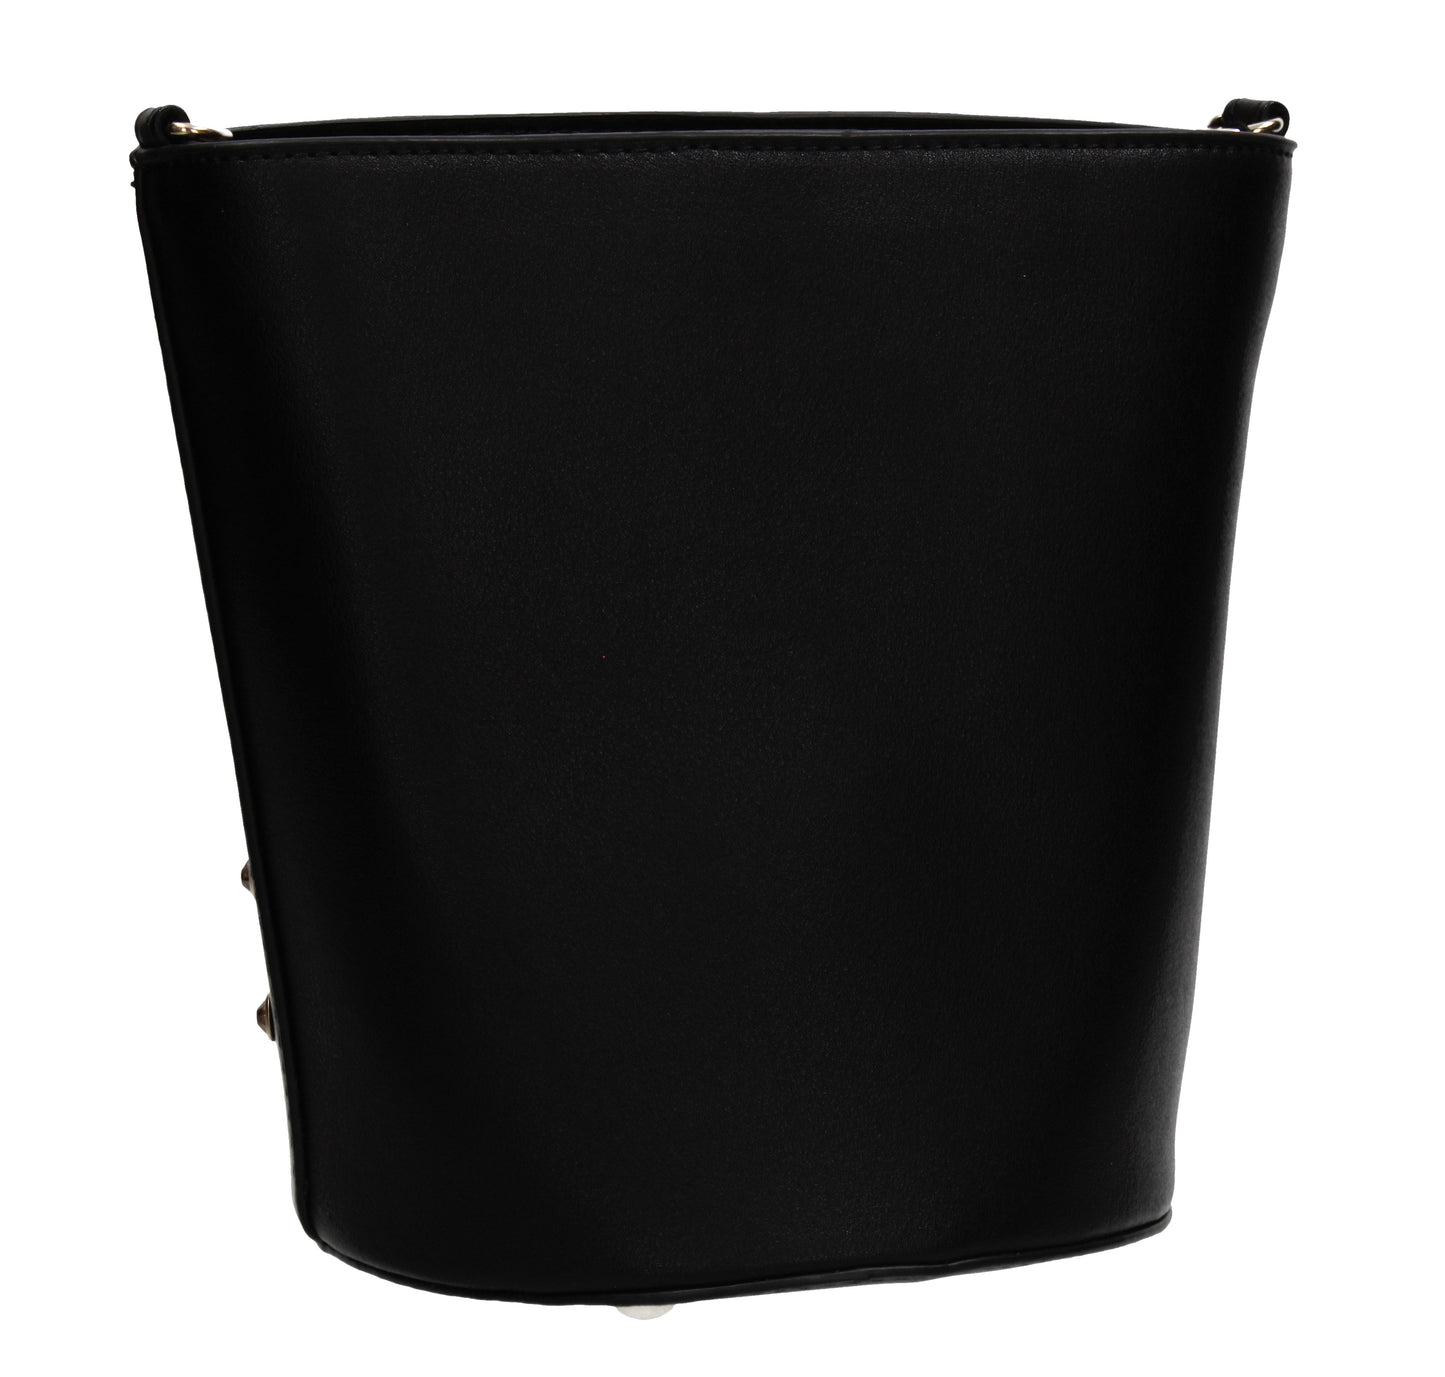 Elley Studs & Bee Bucket Crossbody Bag Black